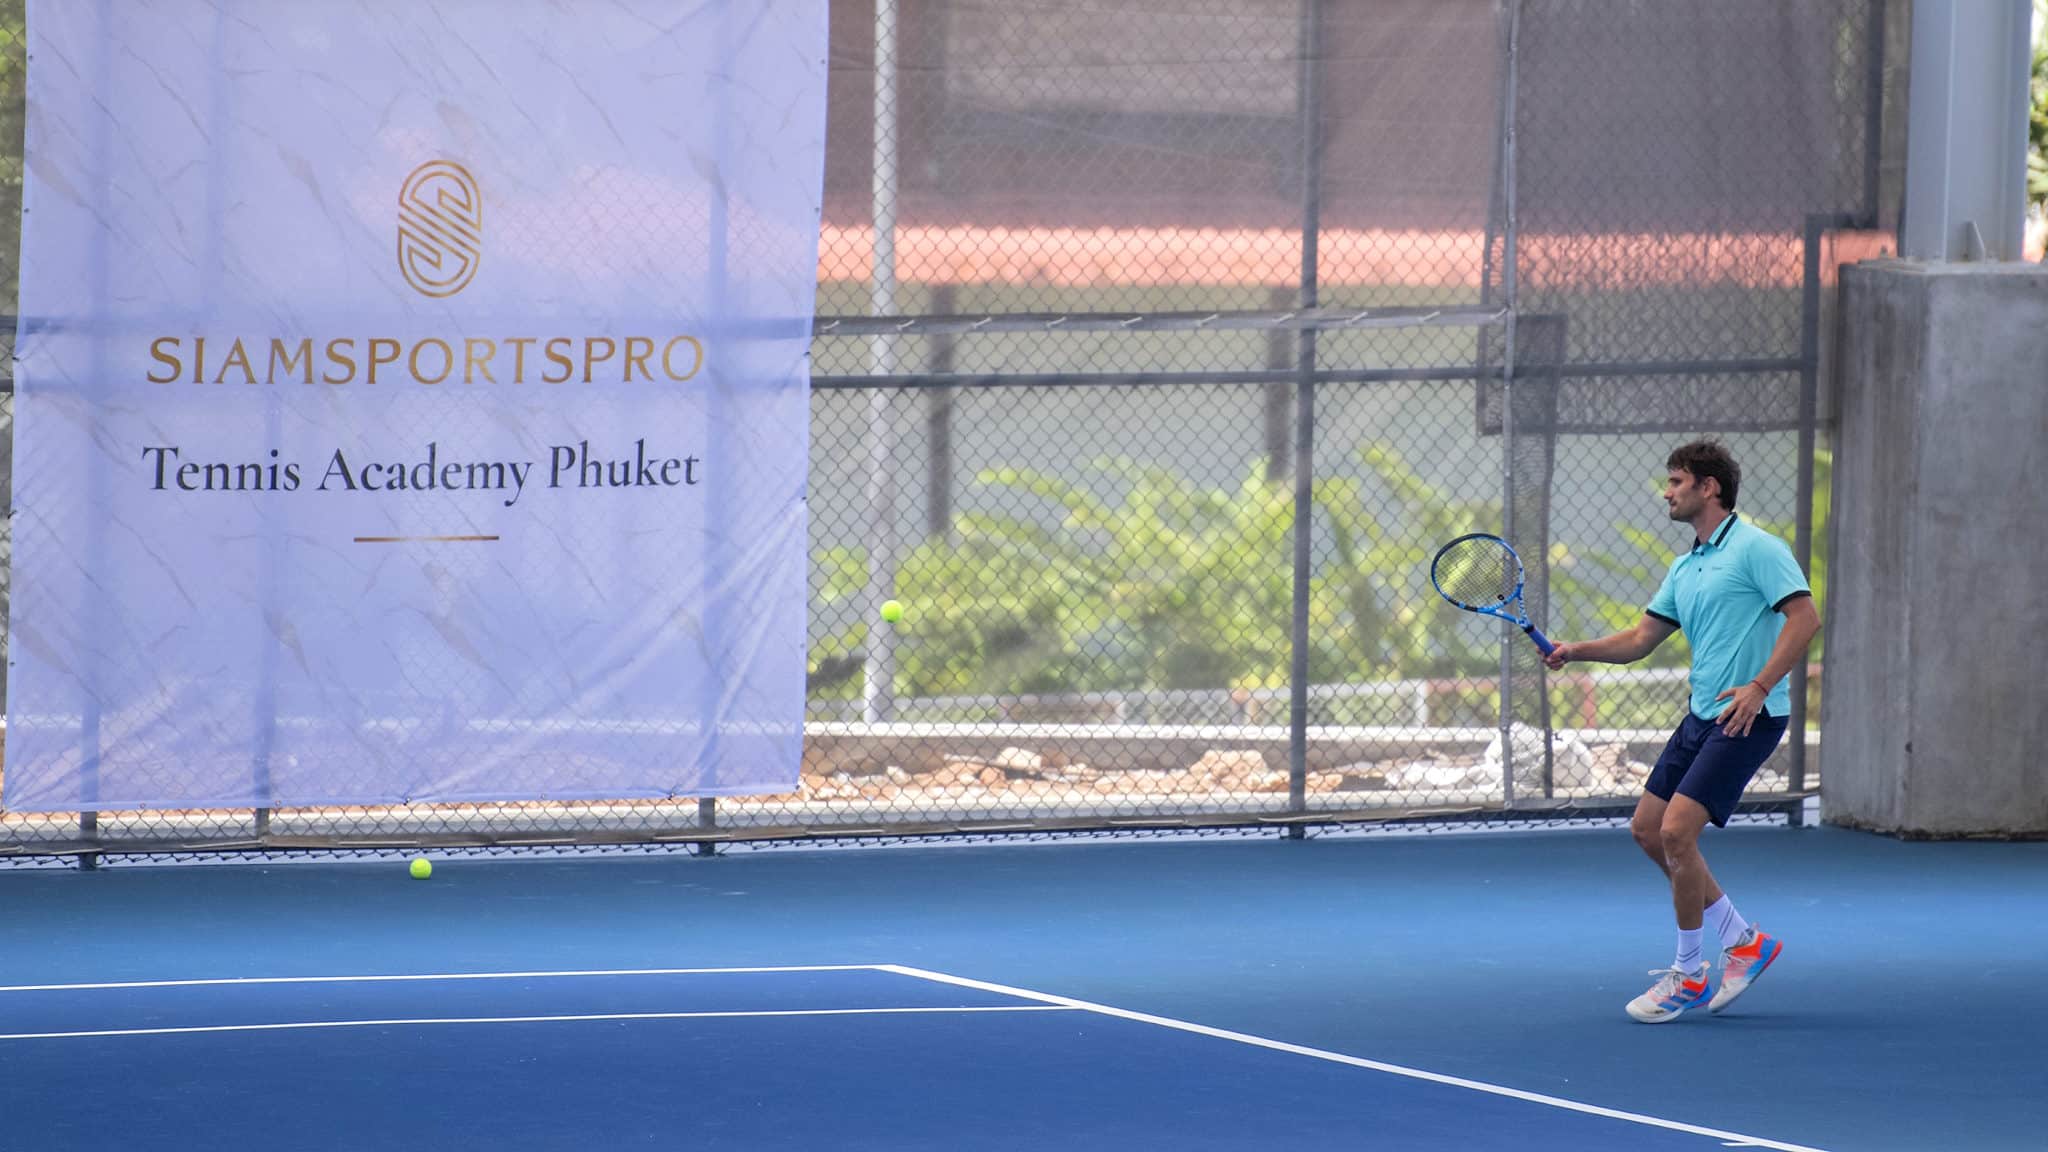 SiamSportsPro Tennis Academy Phuket Tennis Court 3